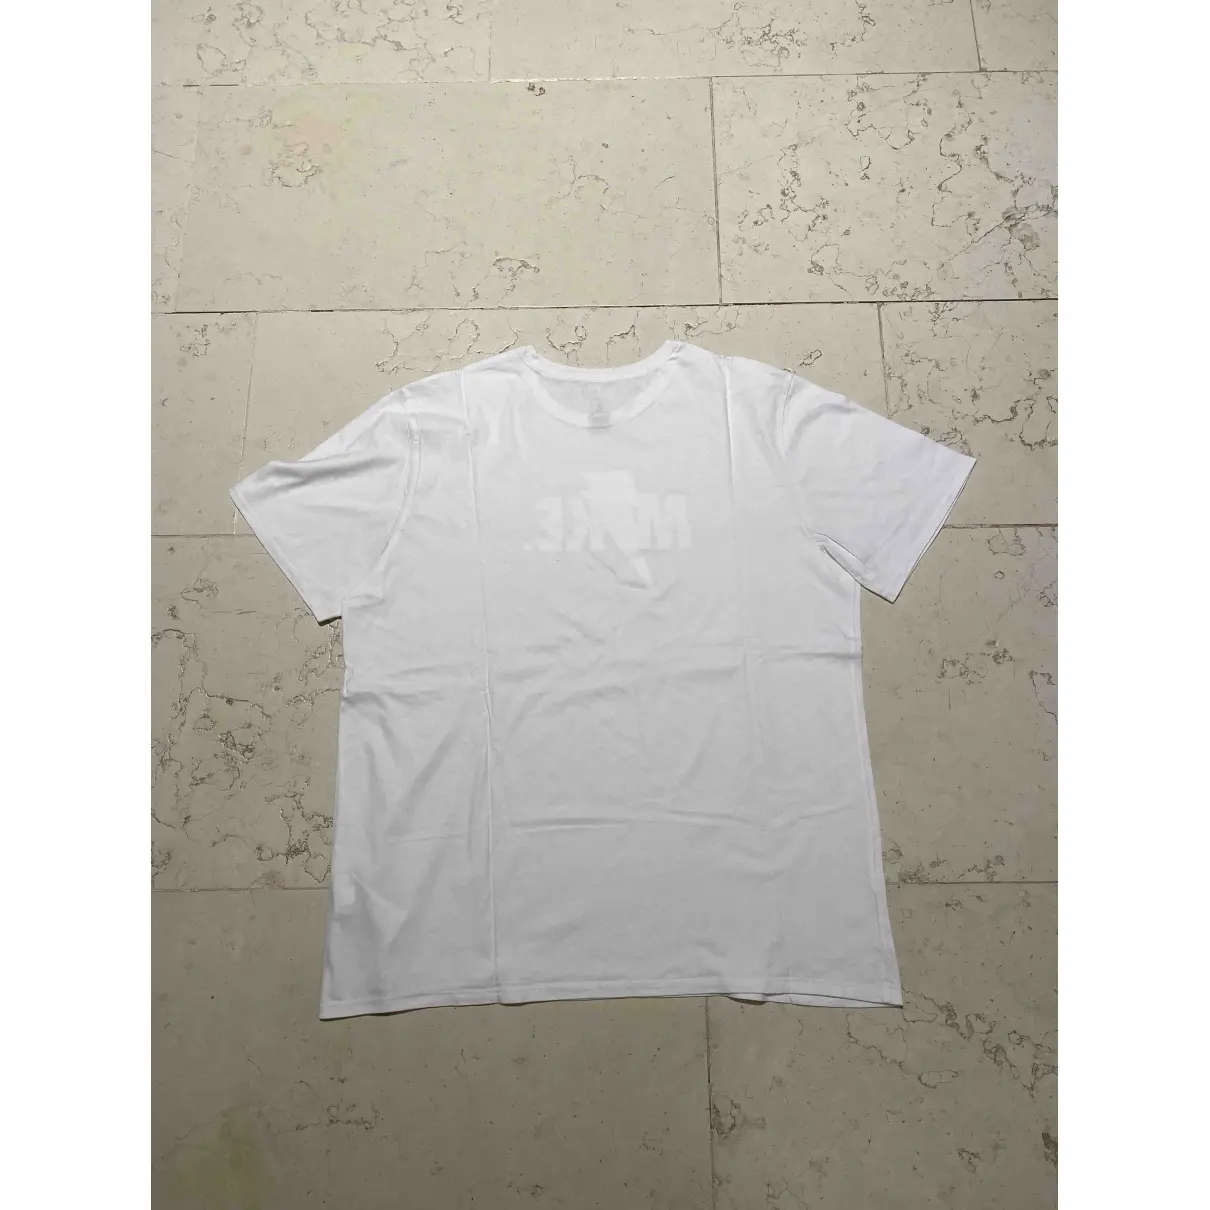 Buy JORDAN White Cotton T-shirt online